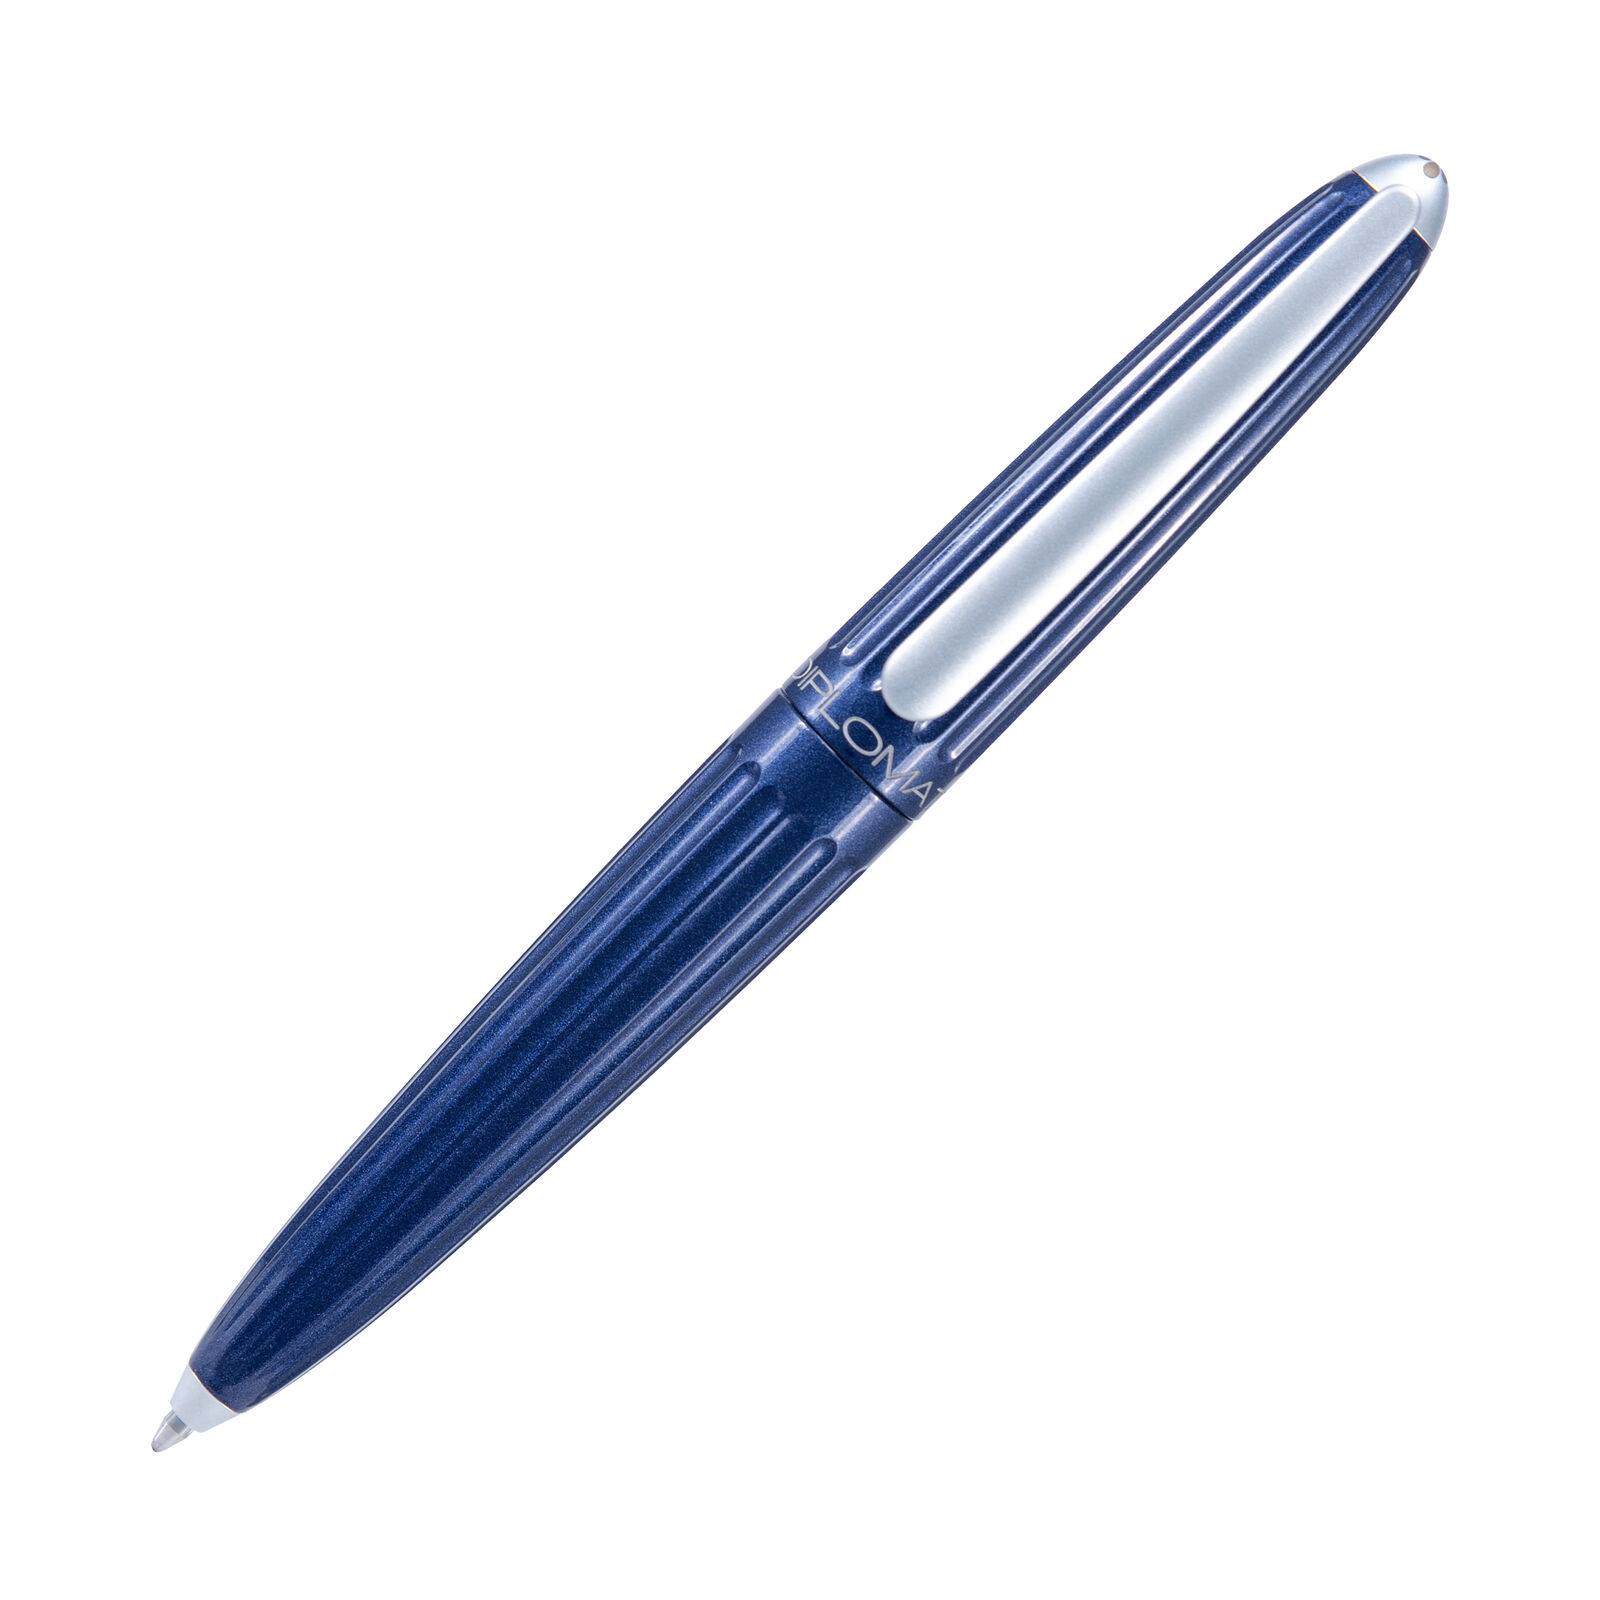 Diplomat Aero Ballpoint Pen in Midnight Blue- NEW in Original Box